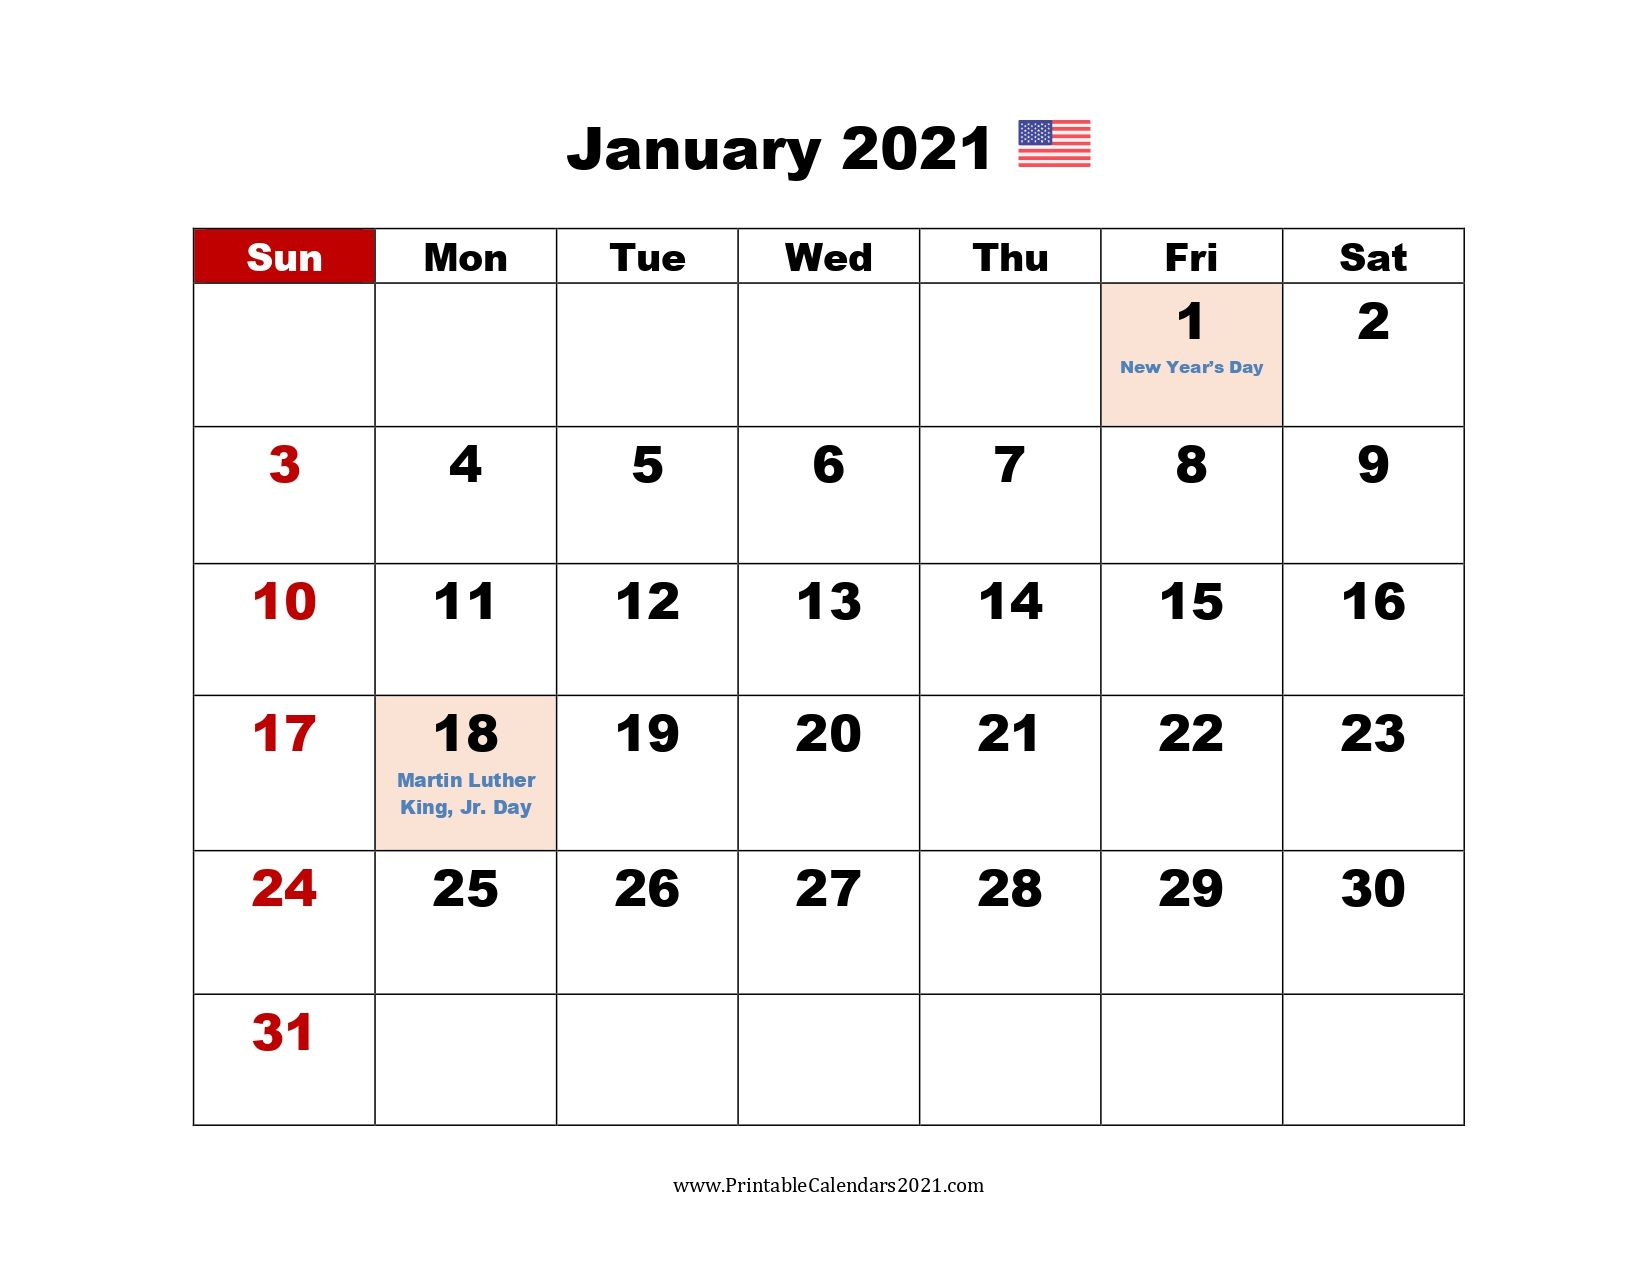 Printable Calendar 2021 January | Calendar Printables 2021 Monthly Calendar January To December 2021 Calendar Printable